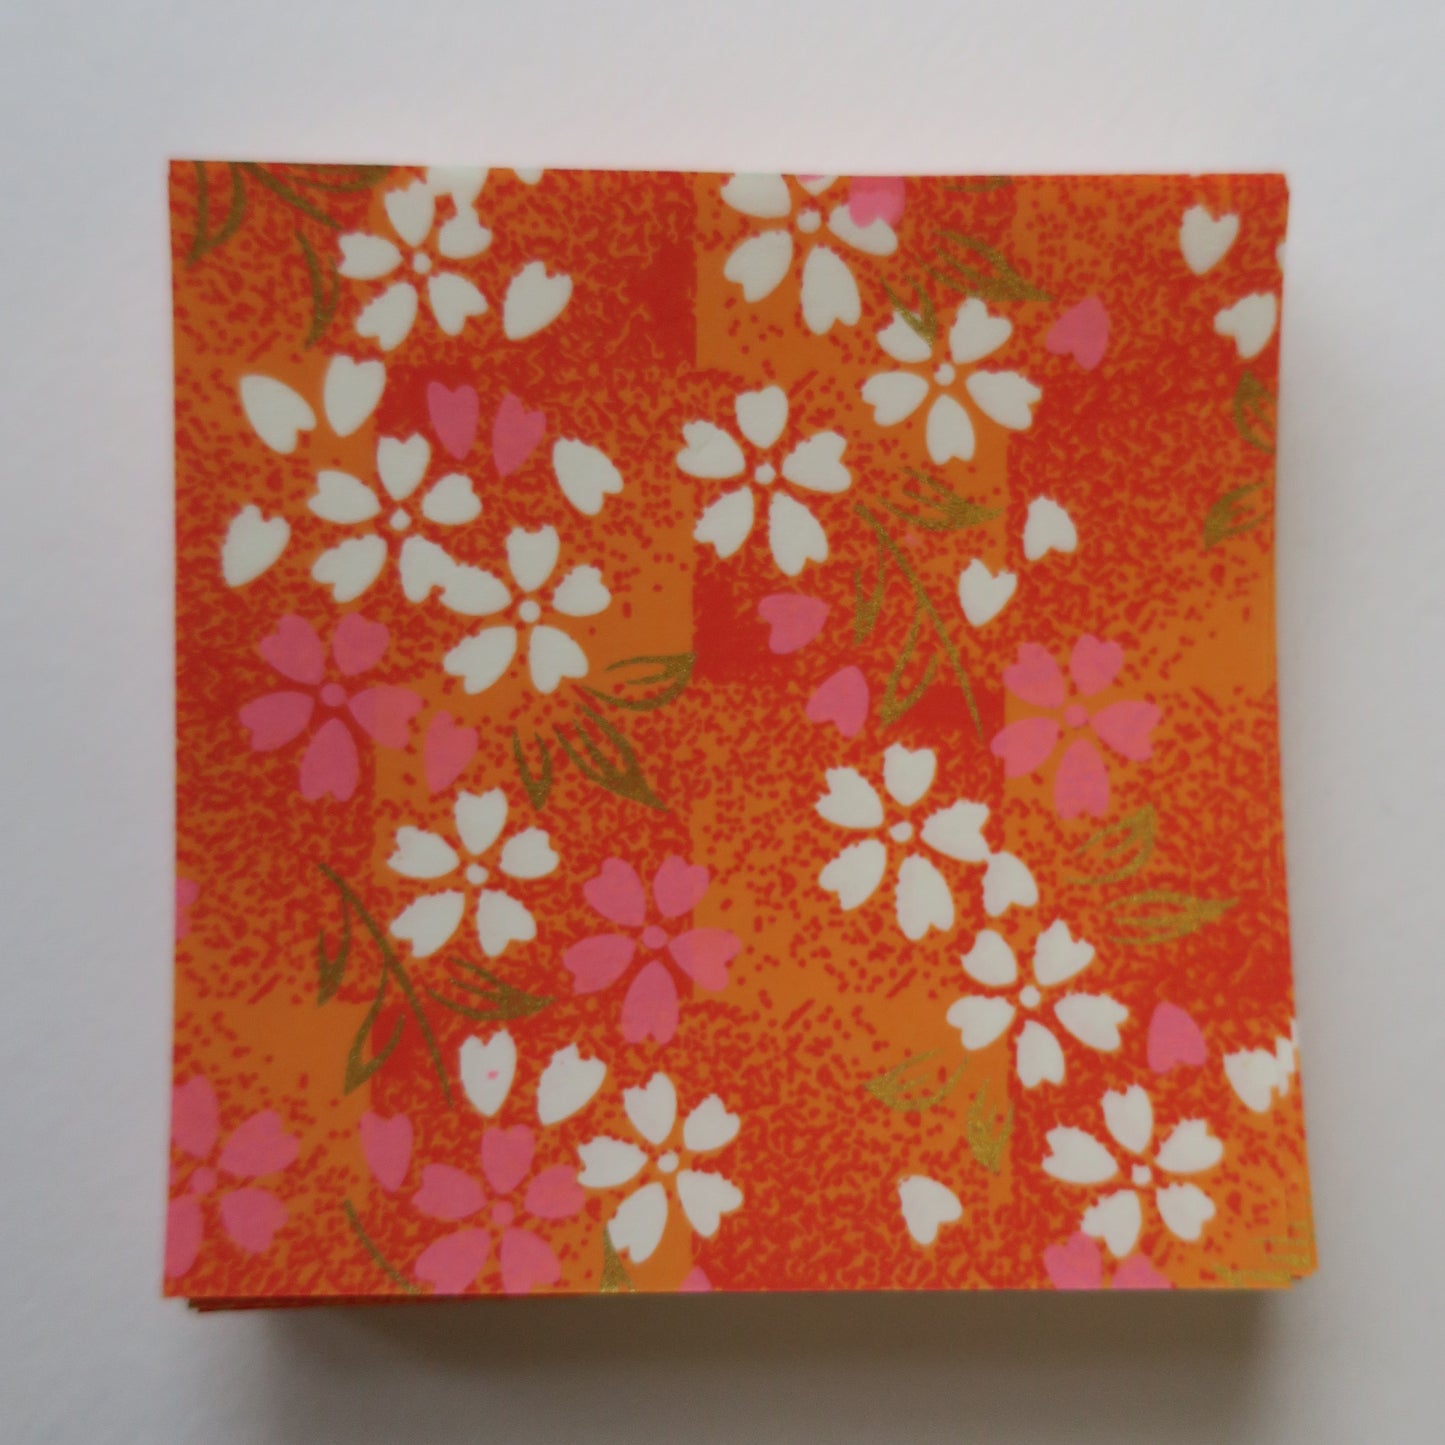 Pack of 100 Sheets 7x7cm Yuzen Washi Origami Paper HZ-342 - Cherry Blossom Orange Shade